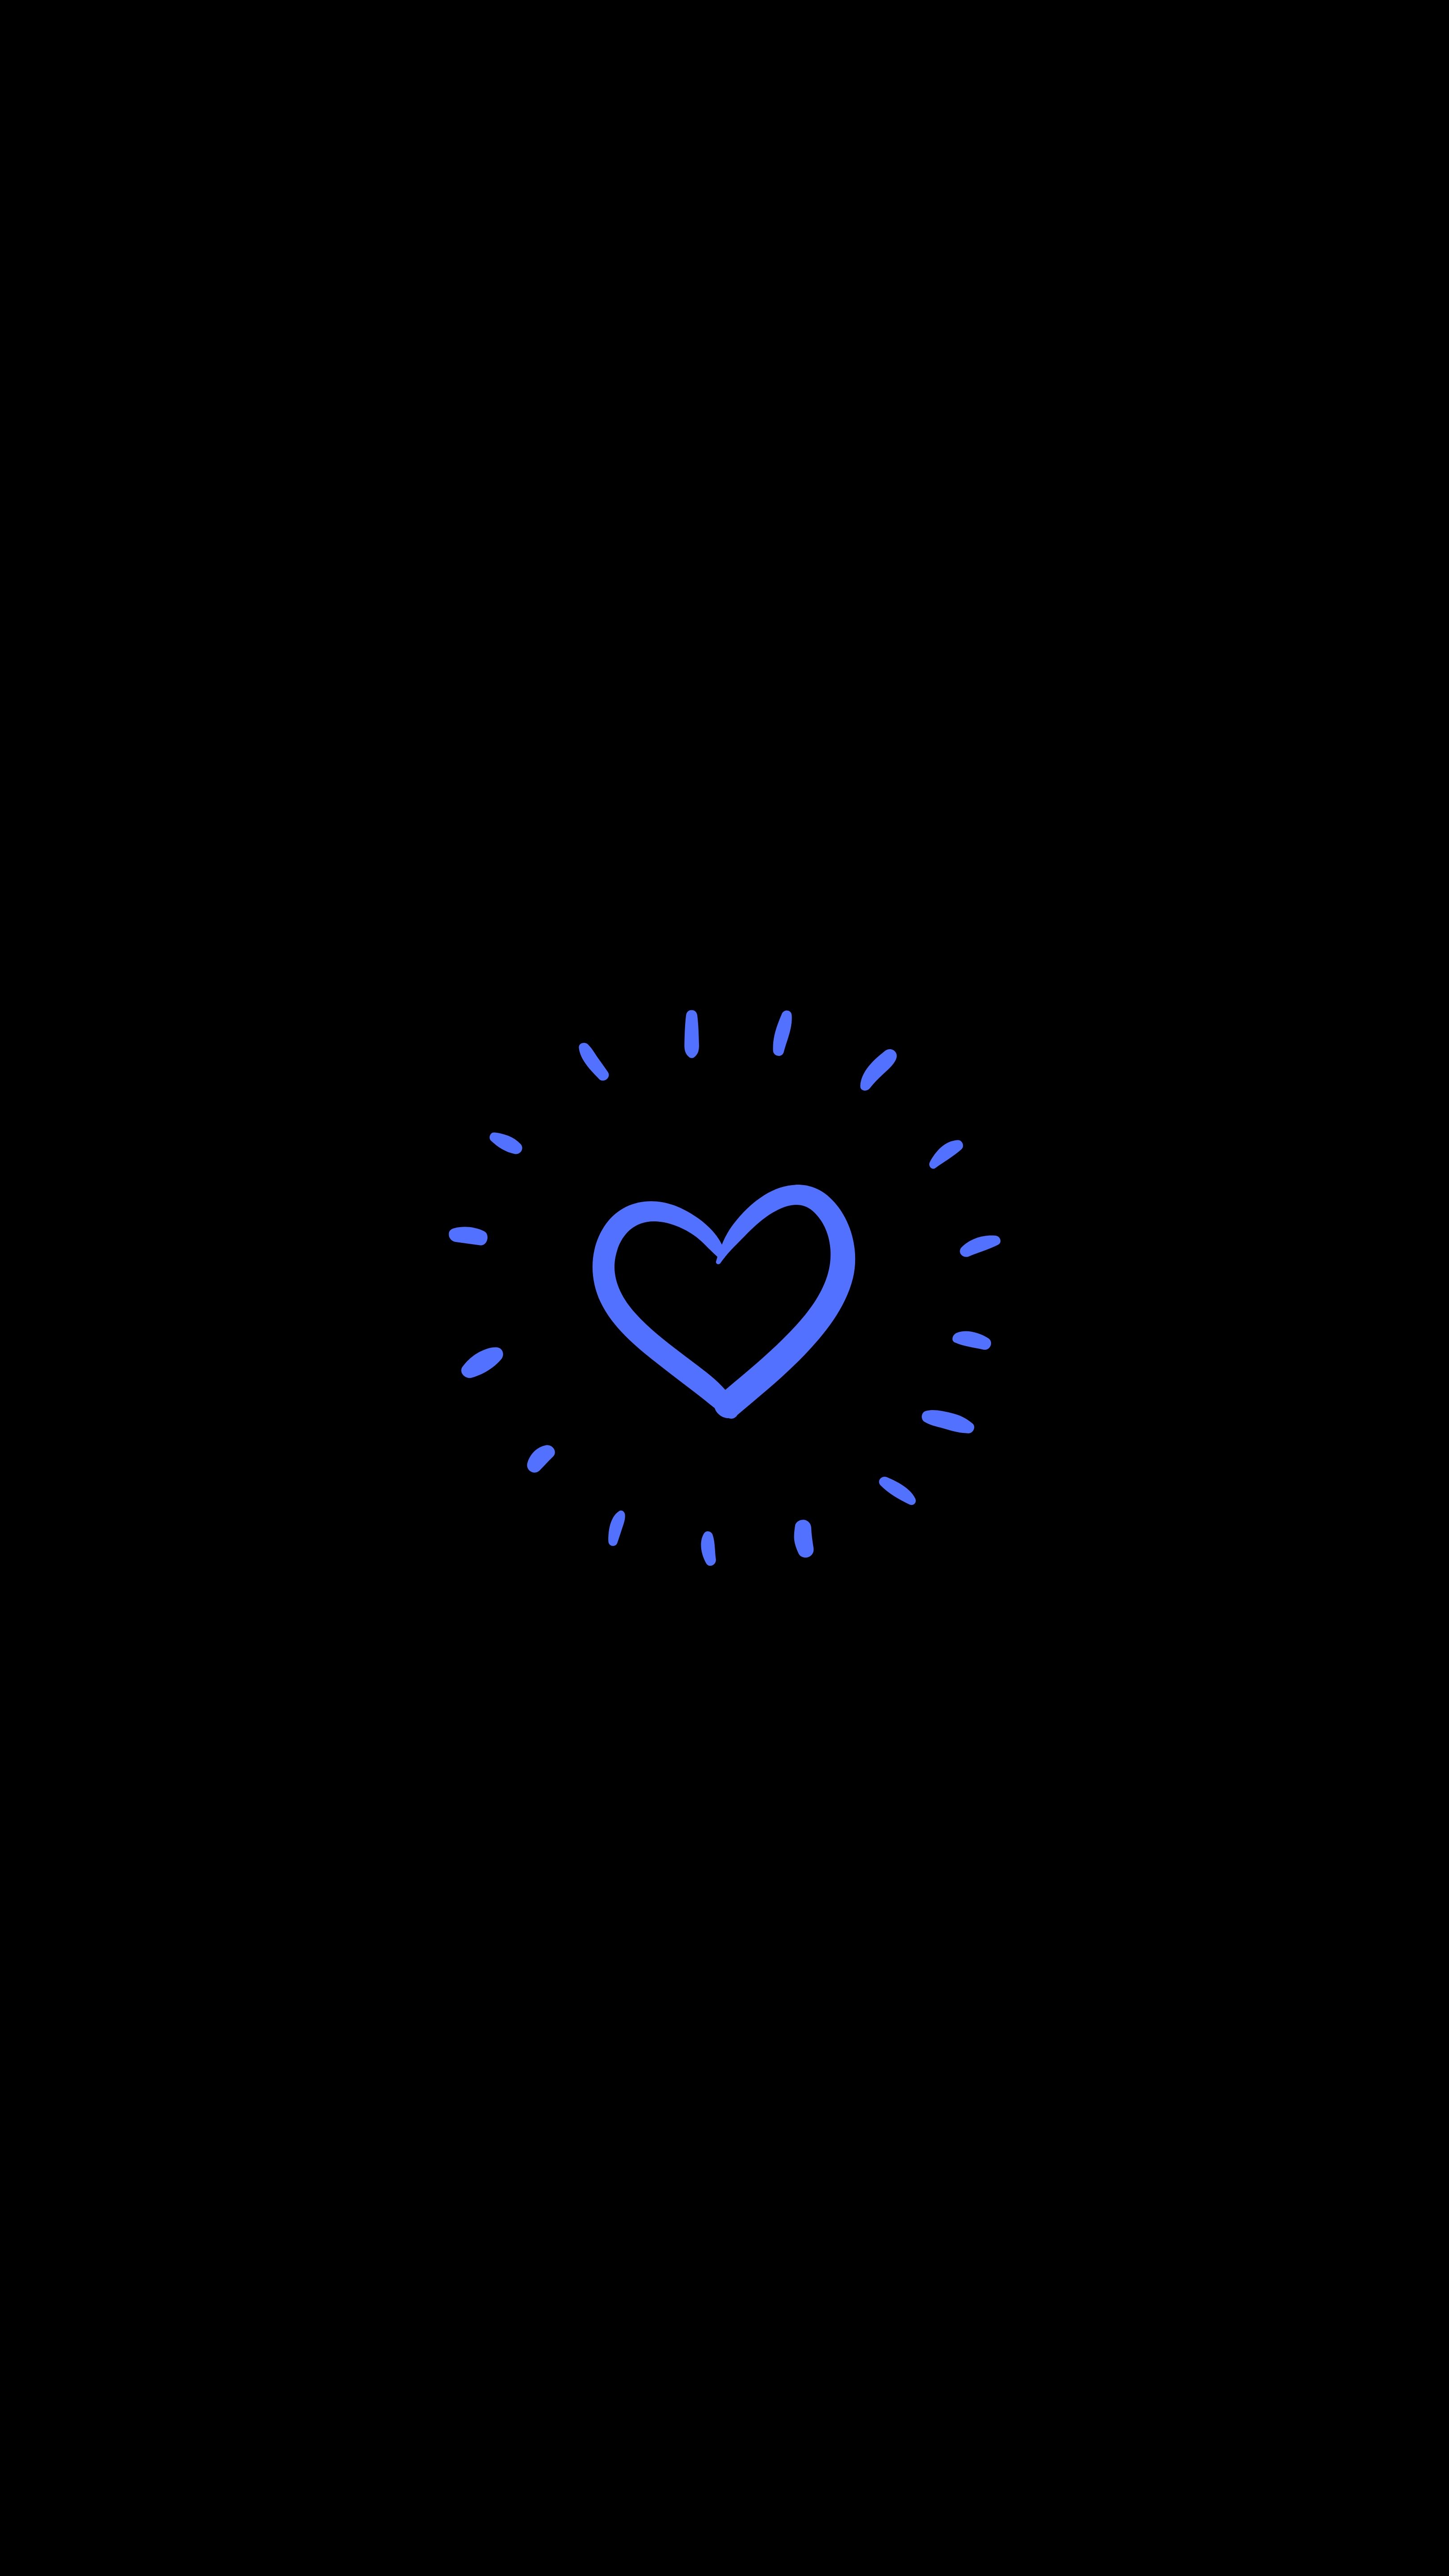 A blue heart outline on a black background - Black heart